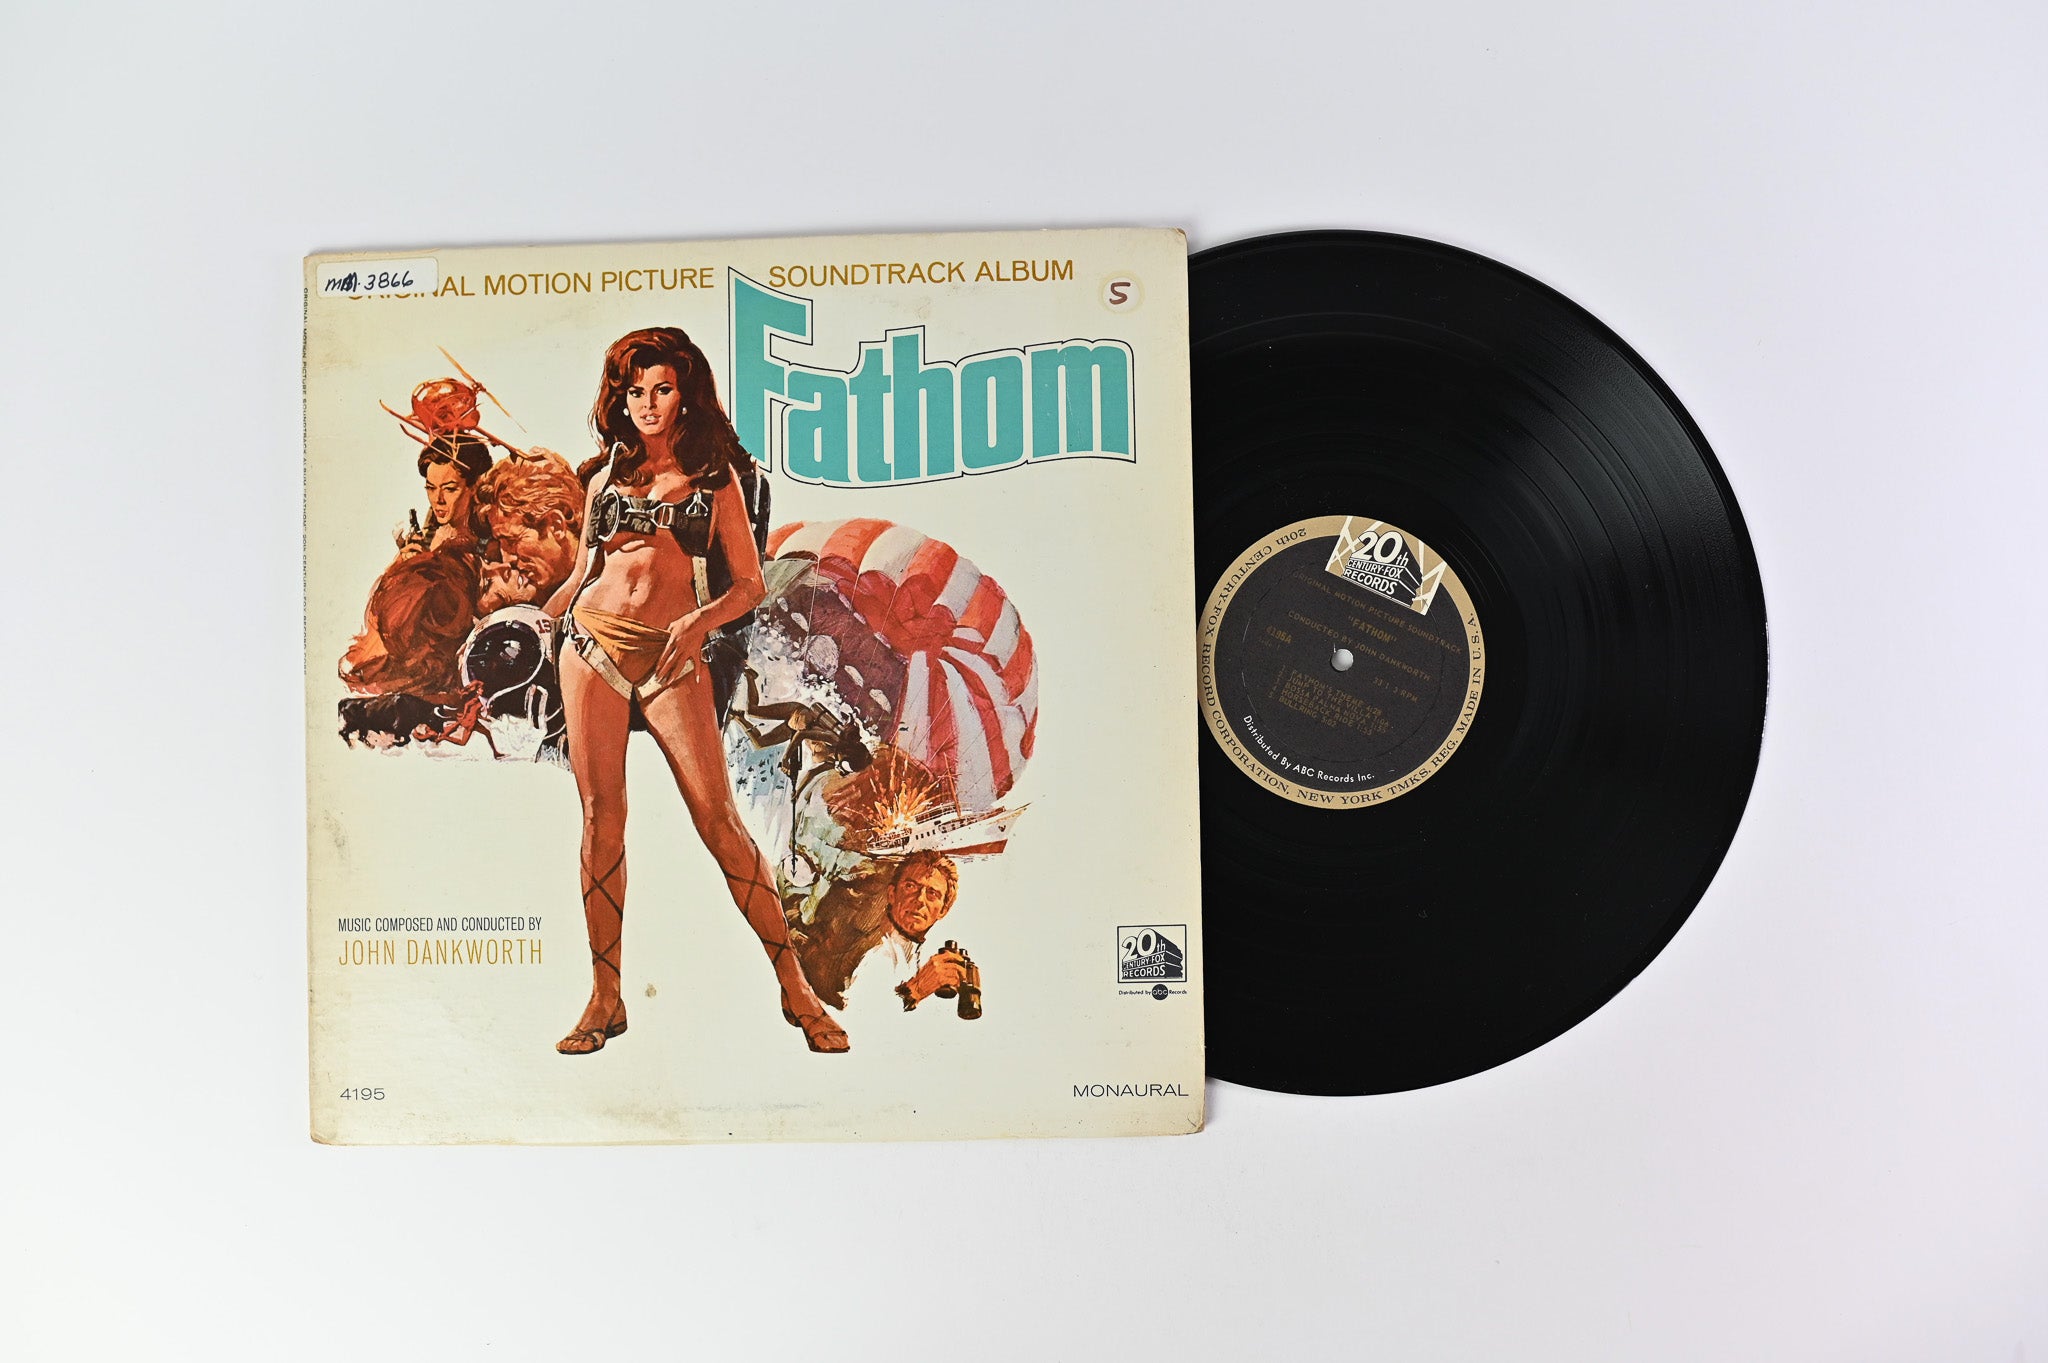 John Dankworth - Fathom (Original Motion Picture Soundtrack Album) on 20th Century Fox Records